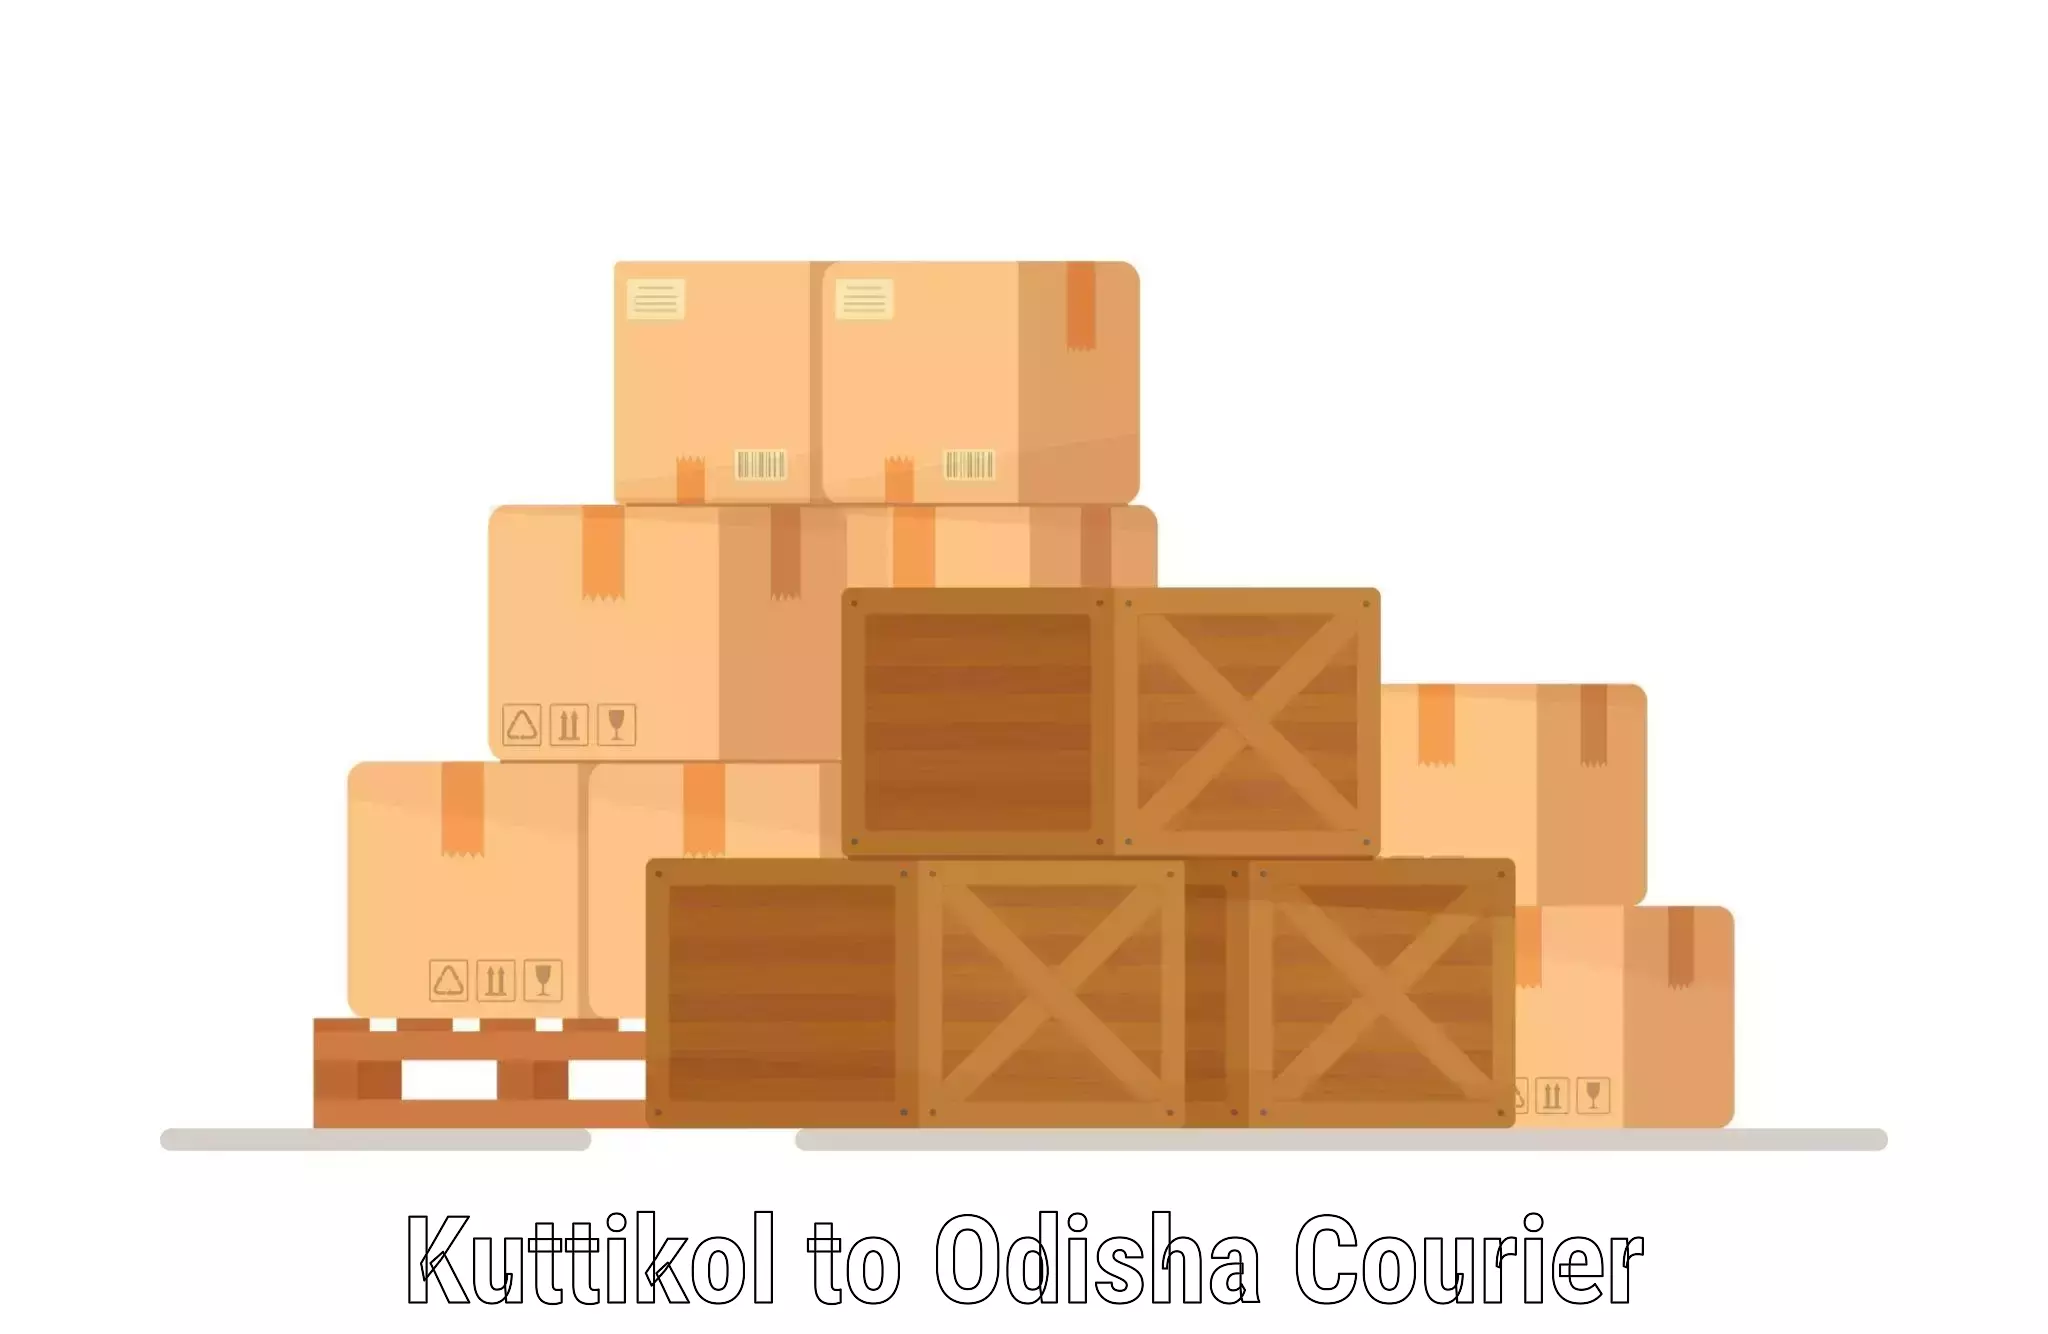 Courier service comparison Kuttikol to Asika